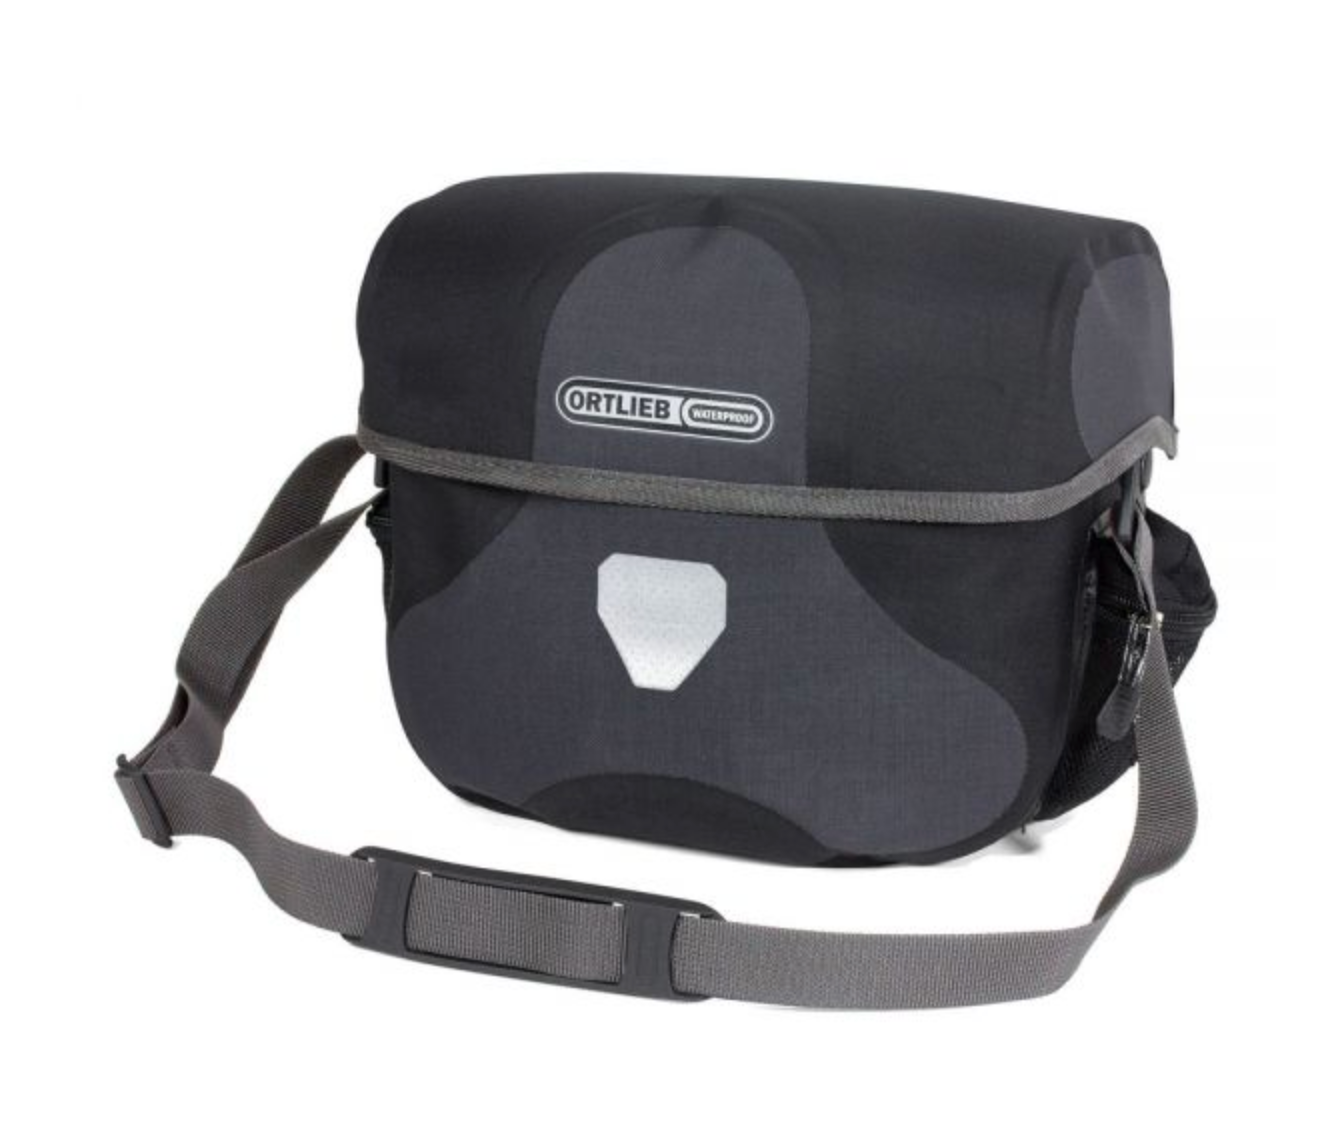 Ortlieb Ultimate 6 Classic/Plus/Original Bag